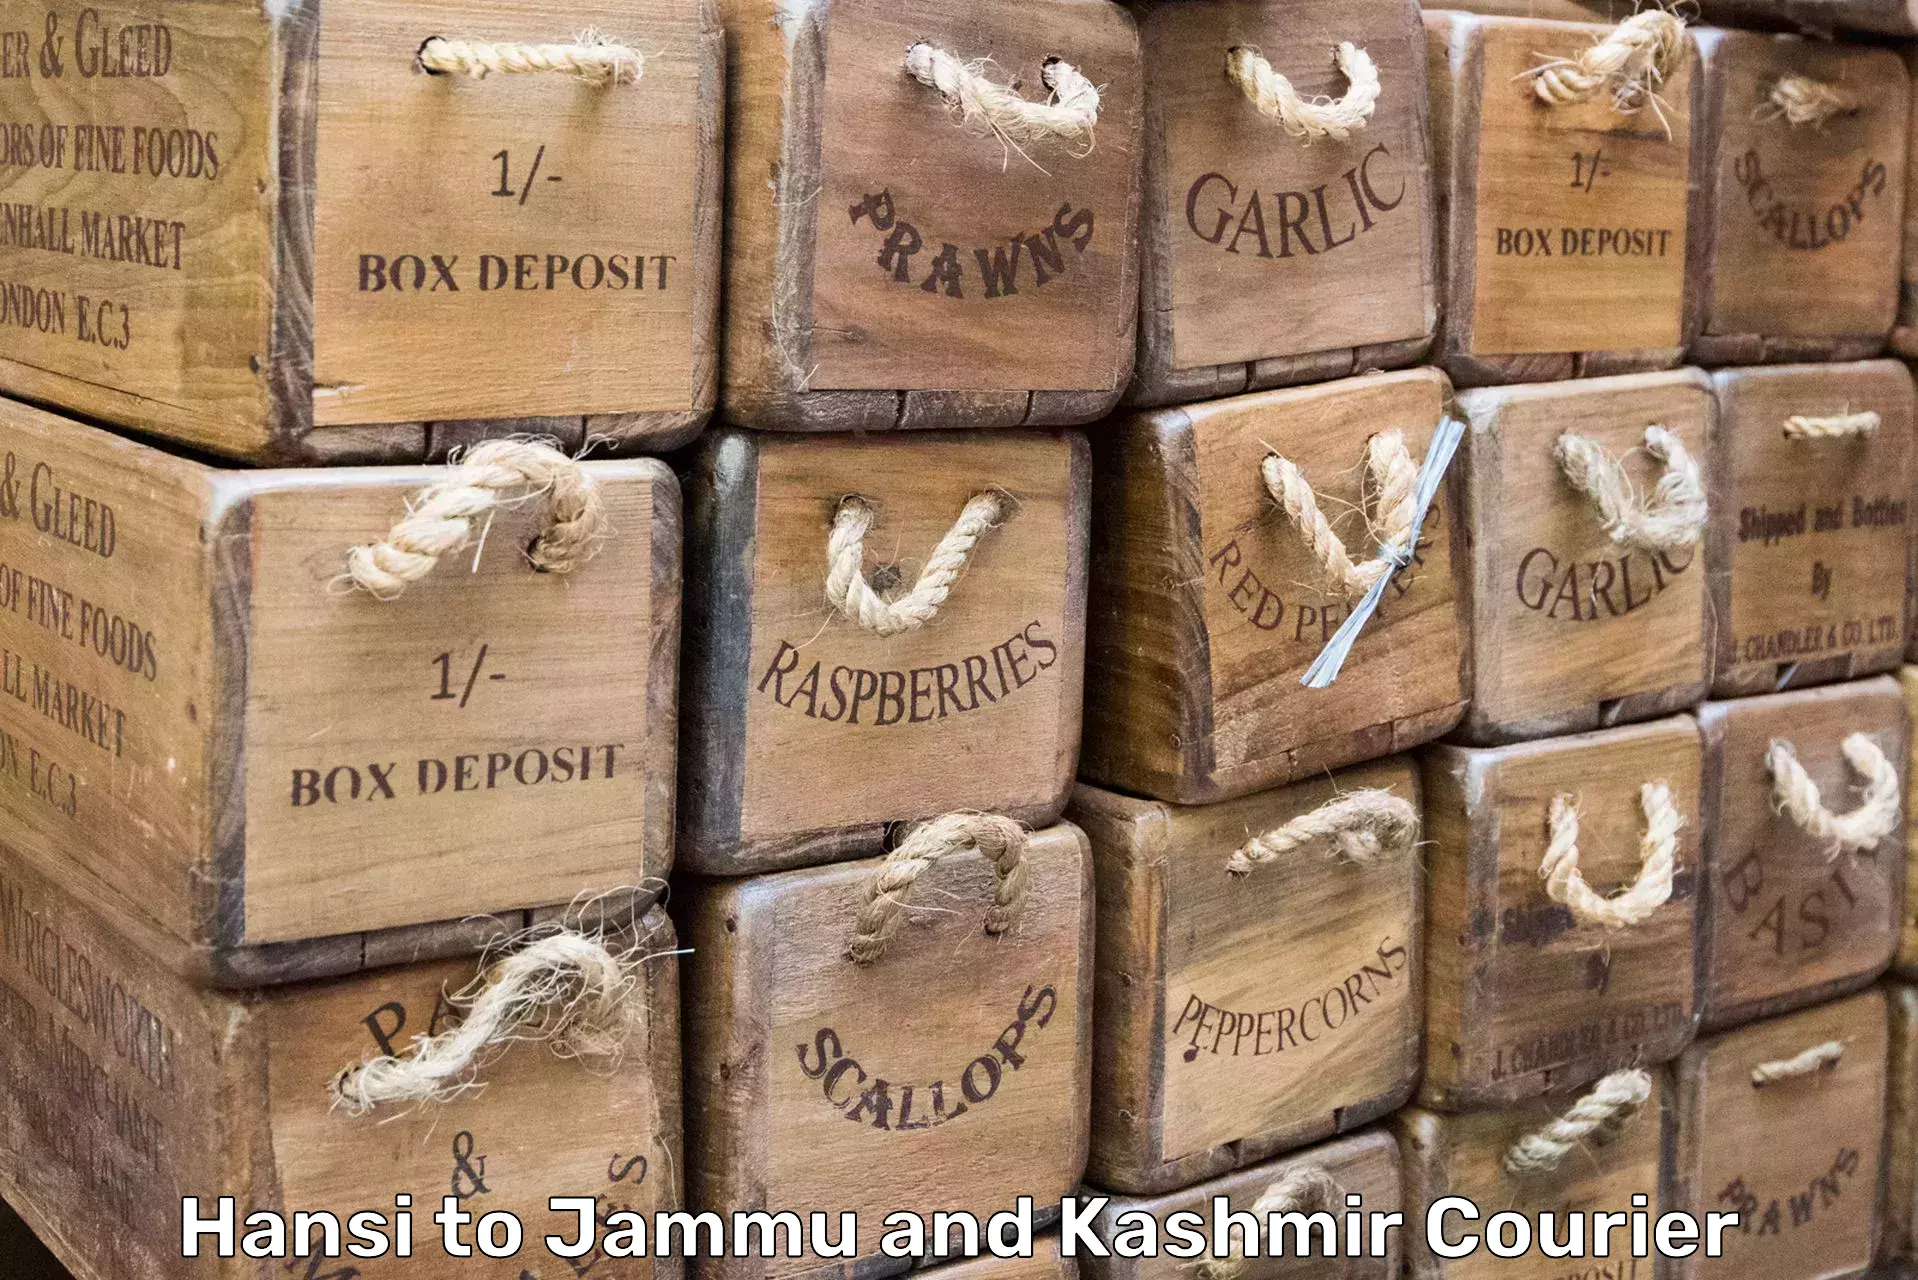 Professional movers Hansi to Srinagar Kashmir